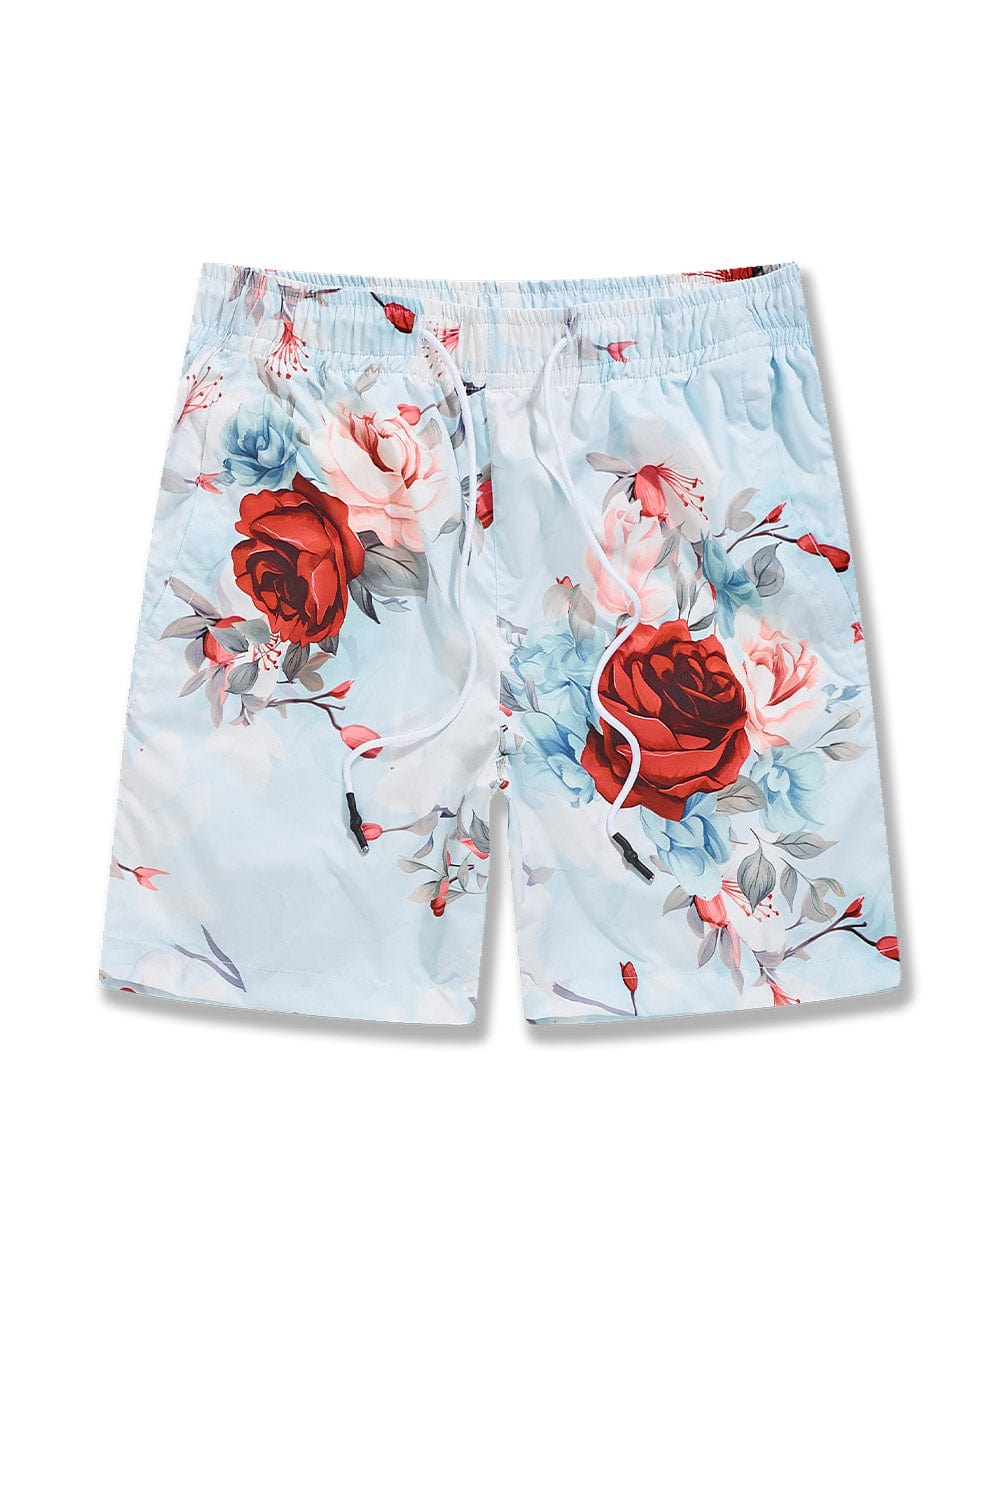 Jordan Craig Retro - Ibiza Lounge Shorts (Red Floral) Red Floral / S